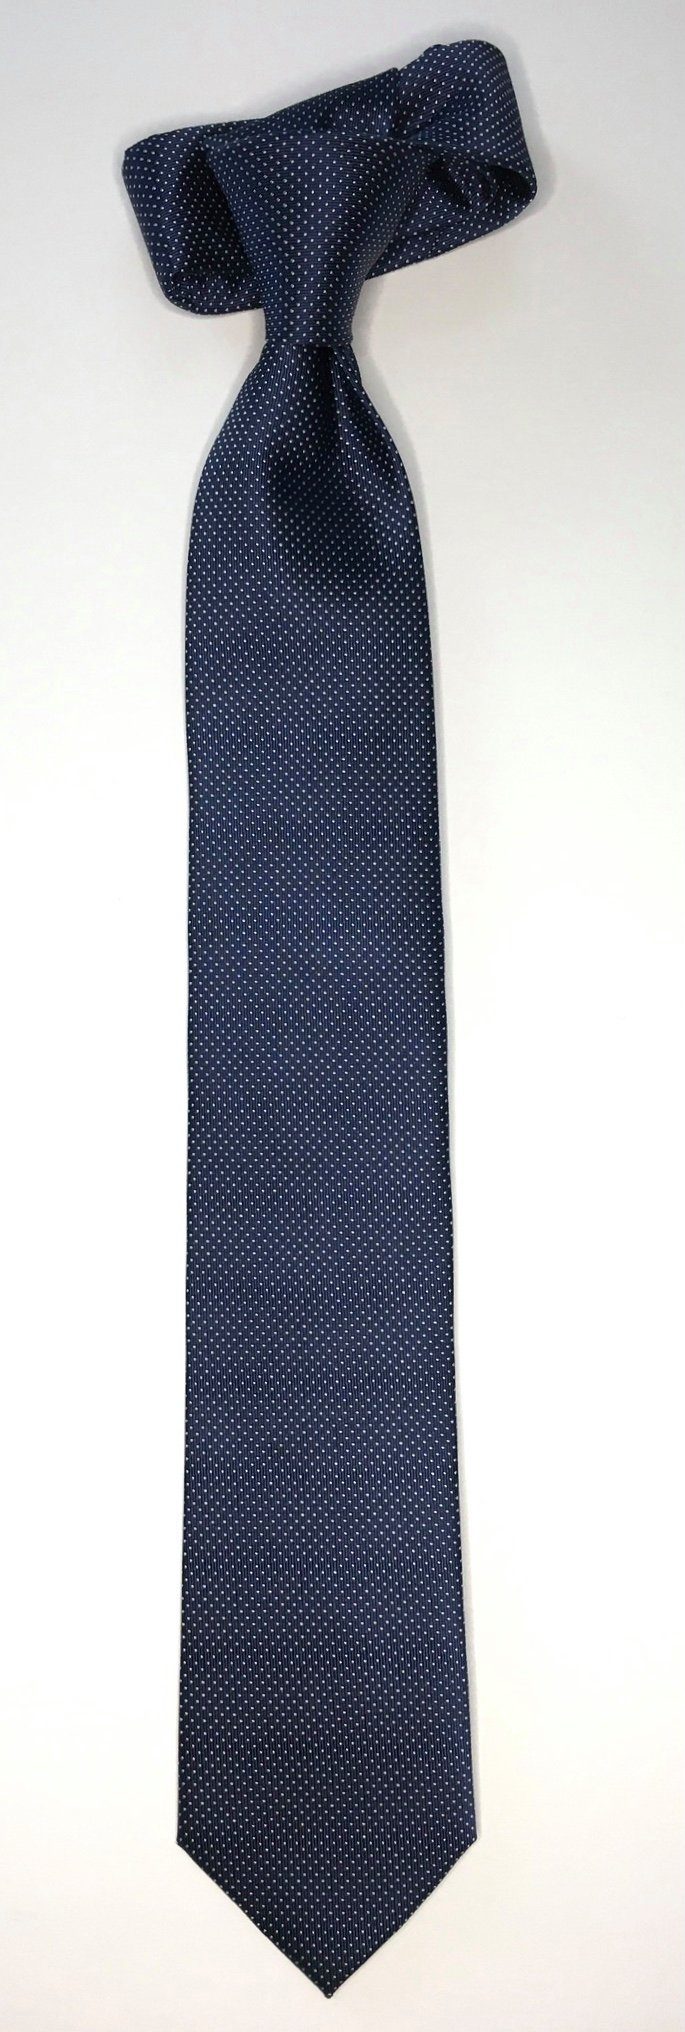 Seidenfalter Picoté Picoté Seidenfalter Krawatte edlen Krawatte Seidenfalter Design Krawatte 6cm im Dunkelblau